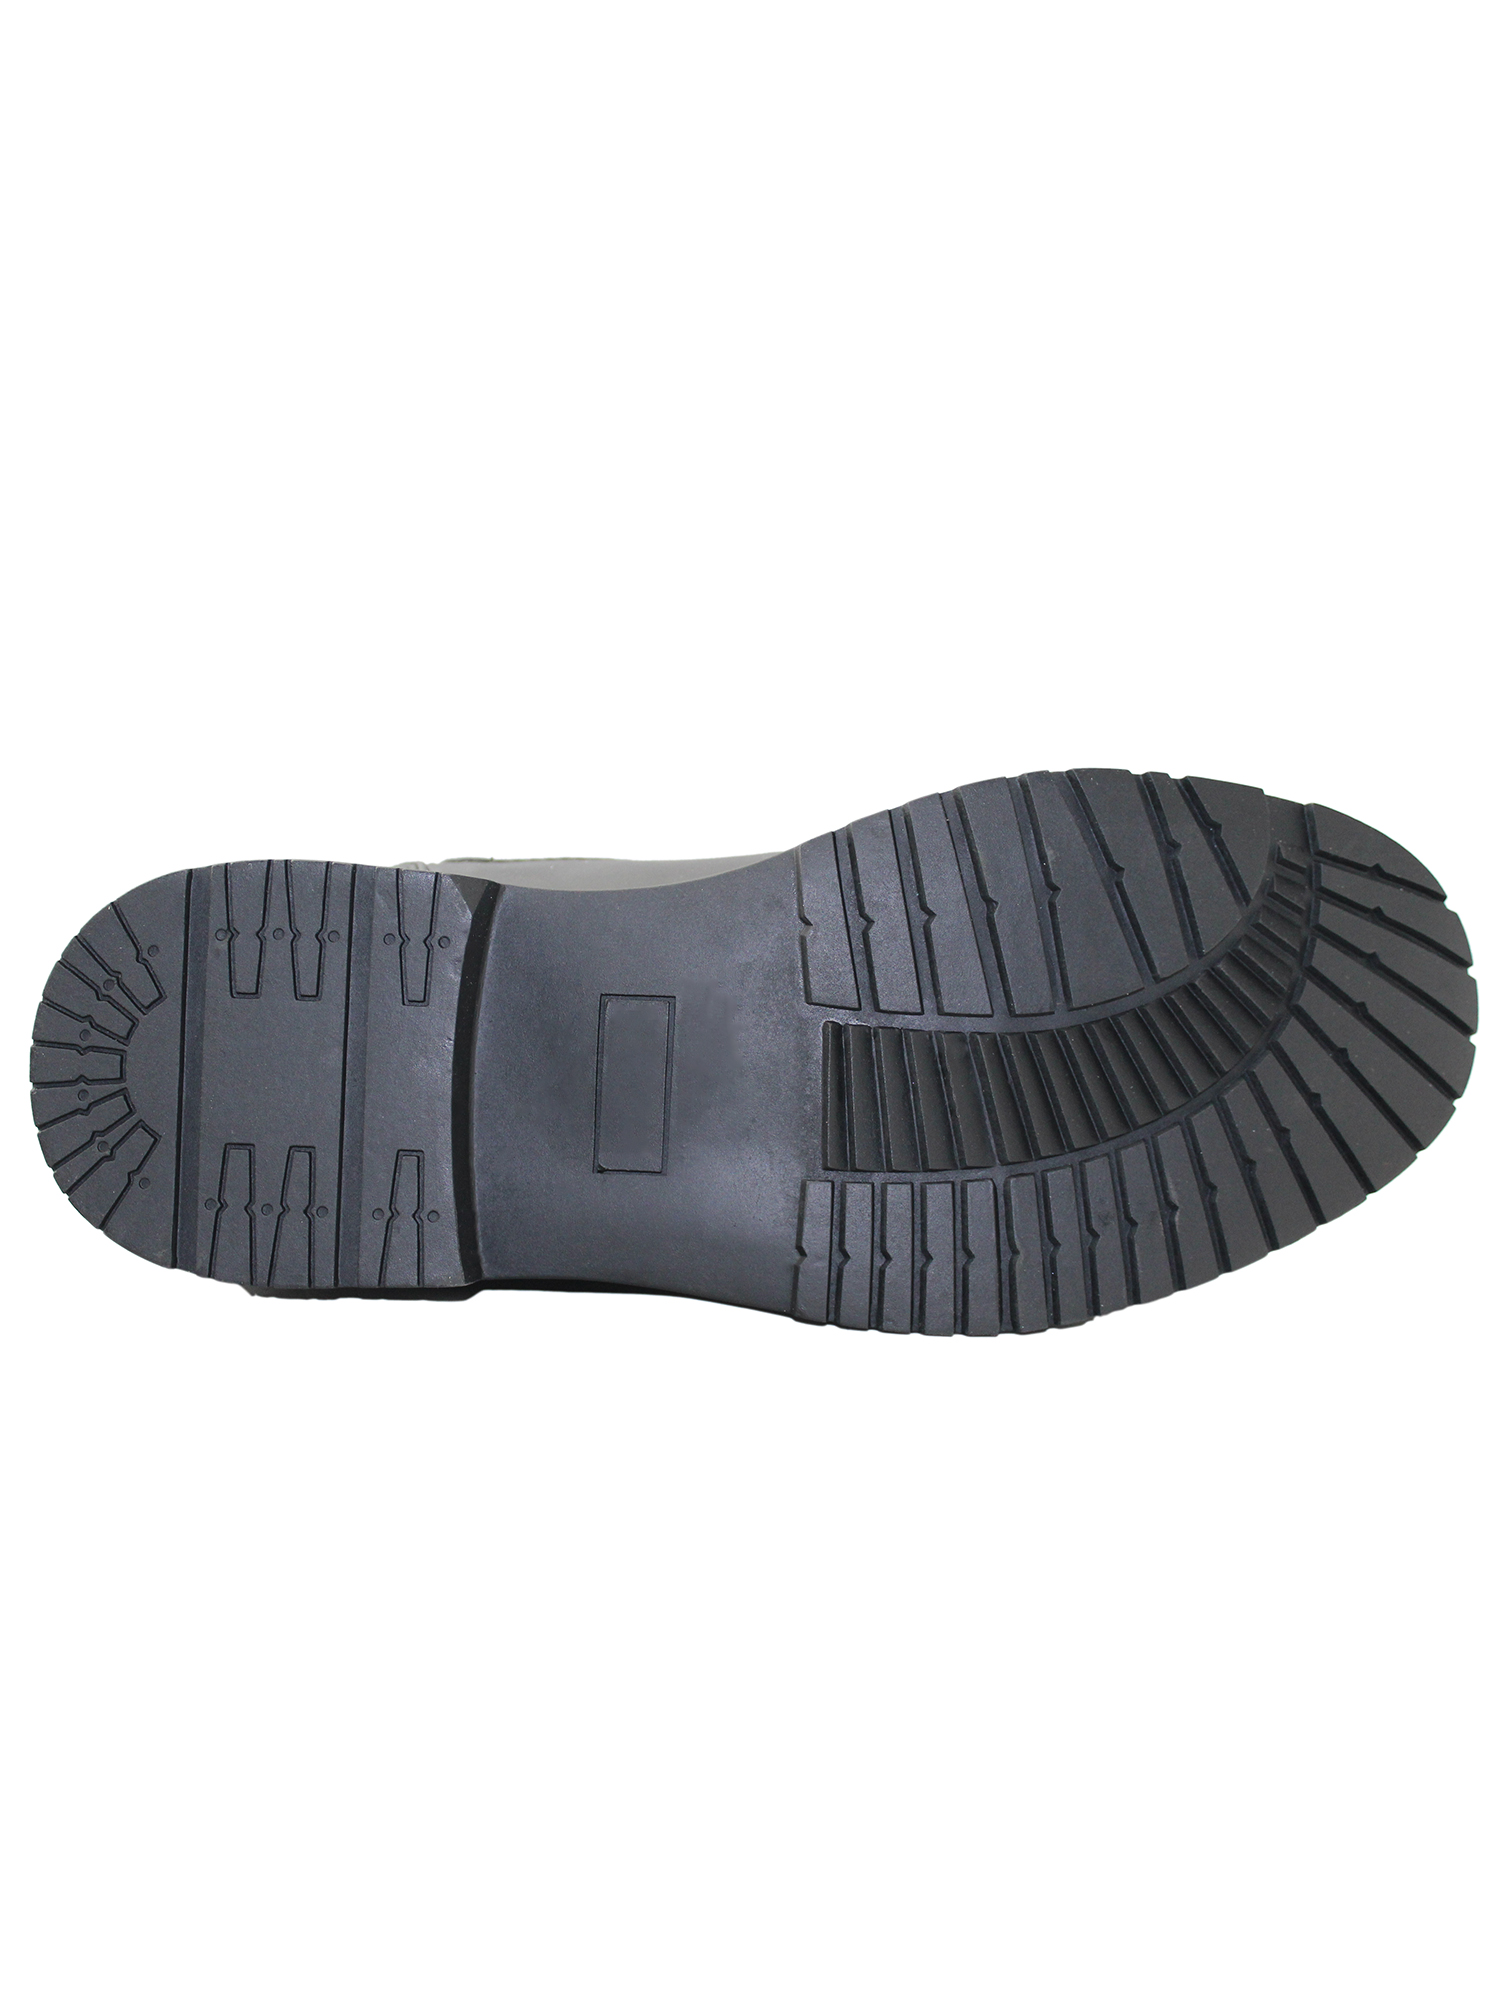 Tanleewa Men's Winter Boots Fur Lining Waterproof Non Slip Snow Boots Side Zipper Shoe Size 7 - image 5 of 6